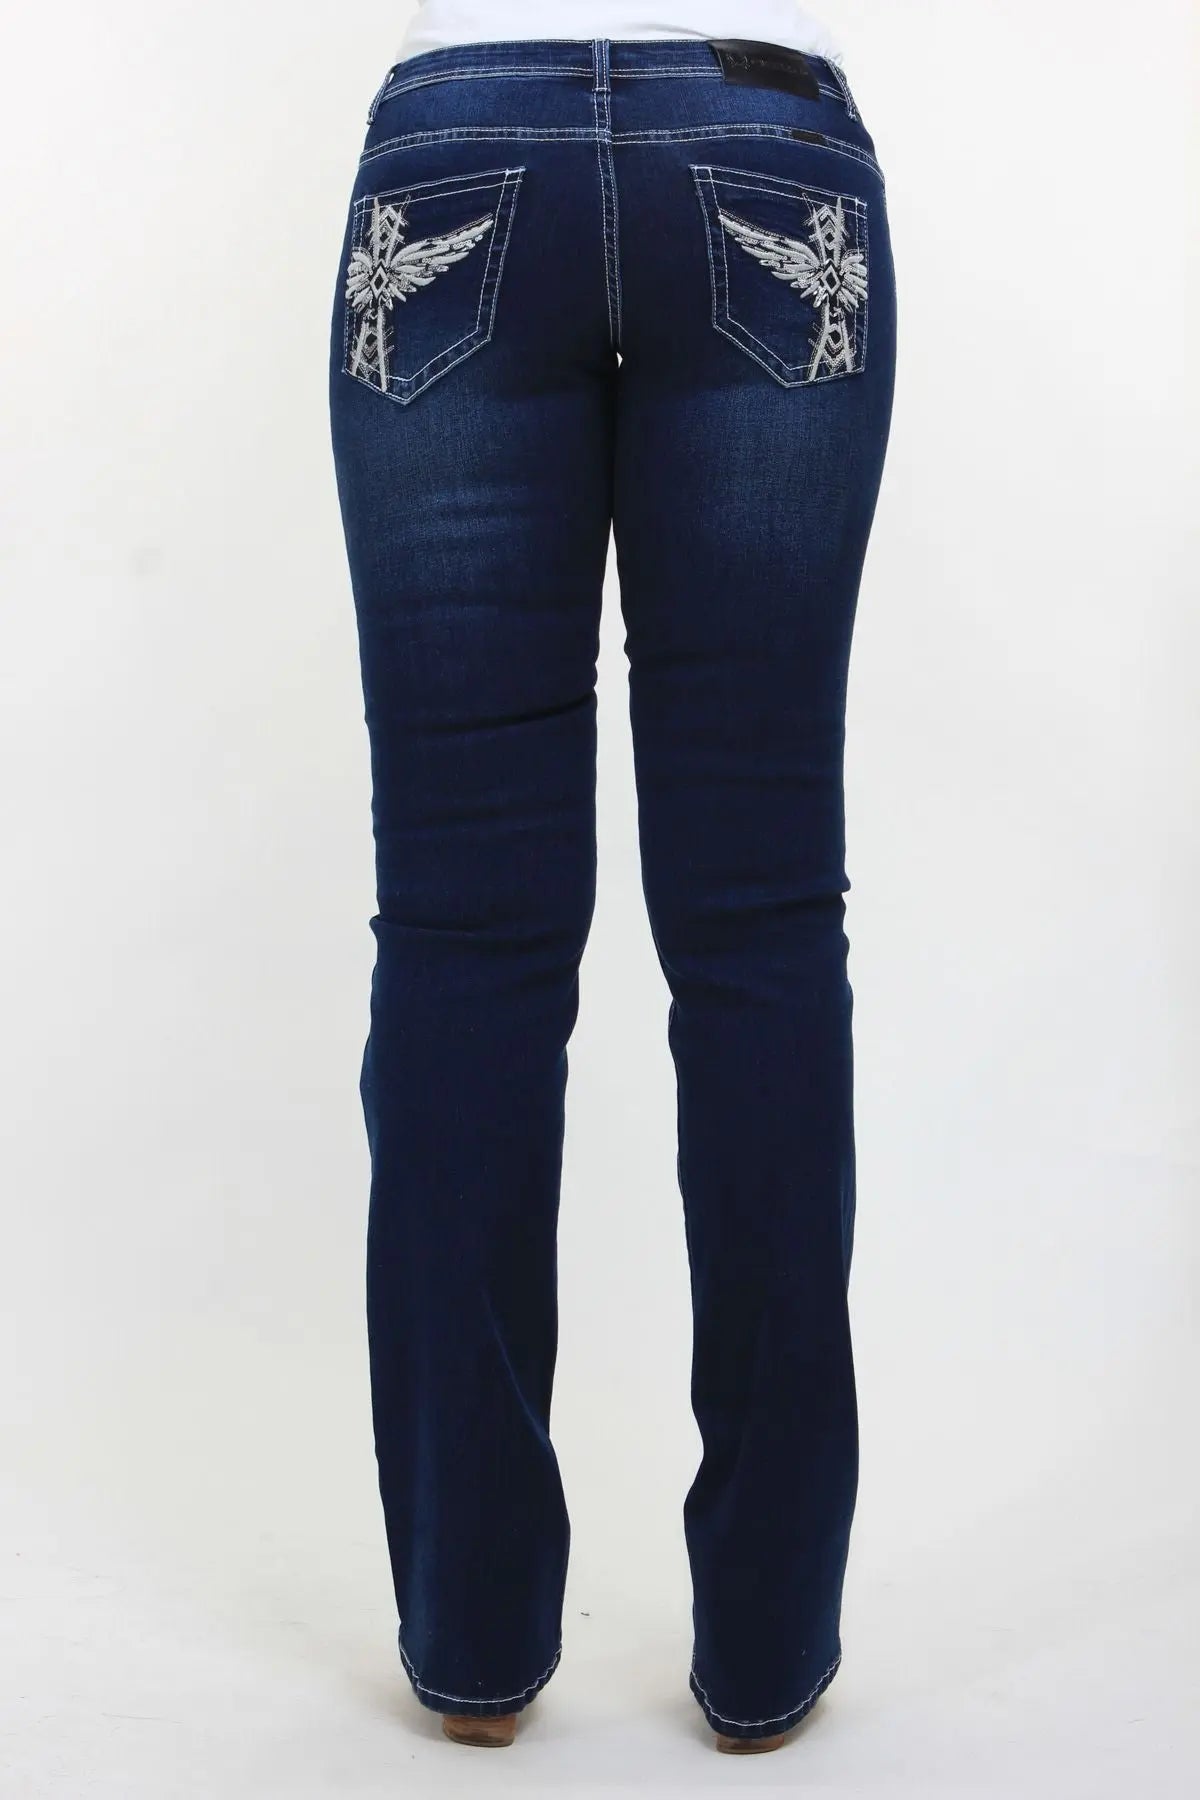 Pocket embellishments on Western Denim Jeans T P Bling Jean Outback Supply Co